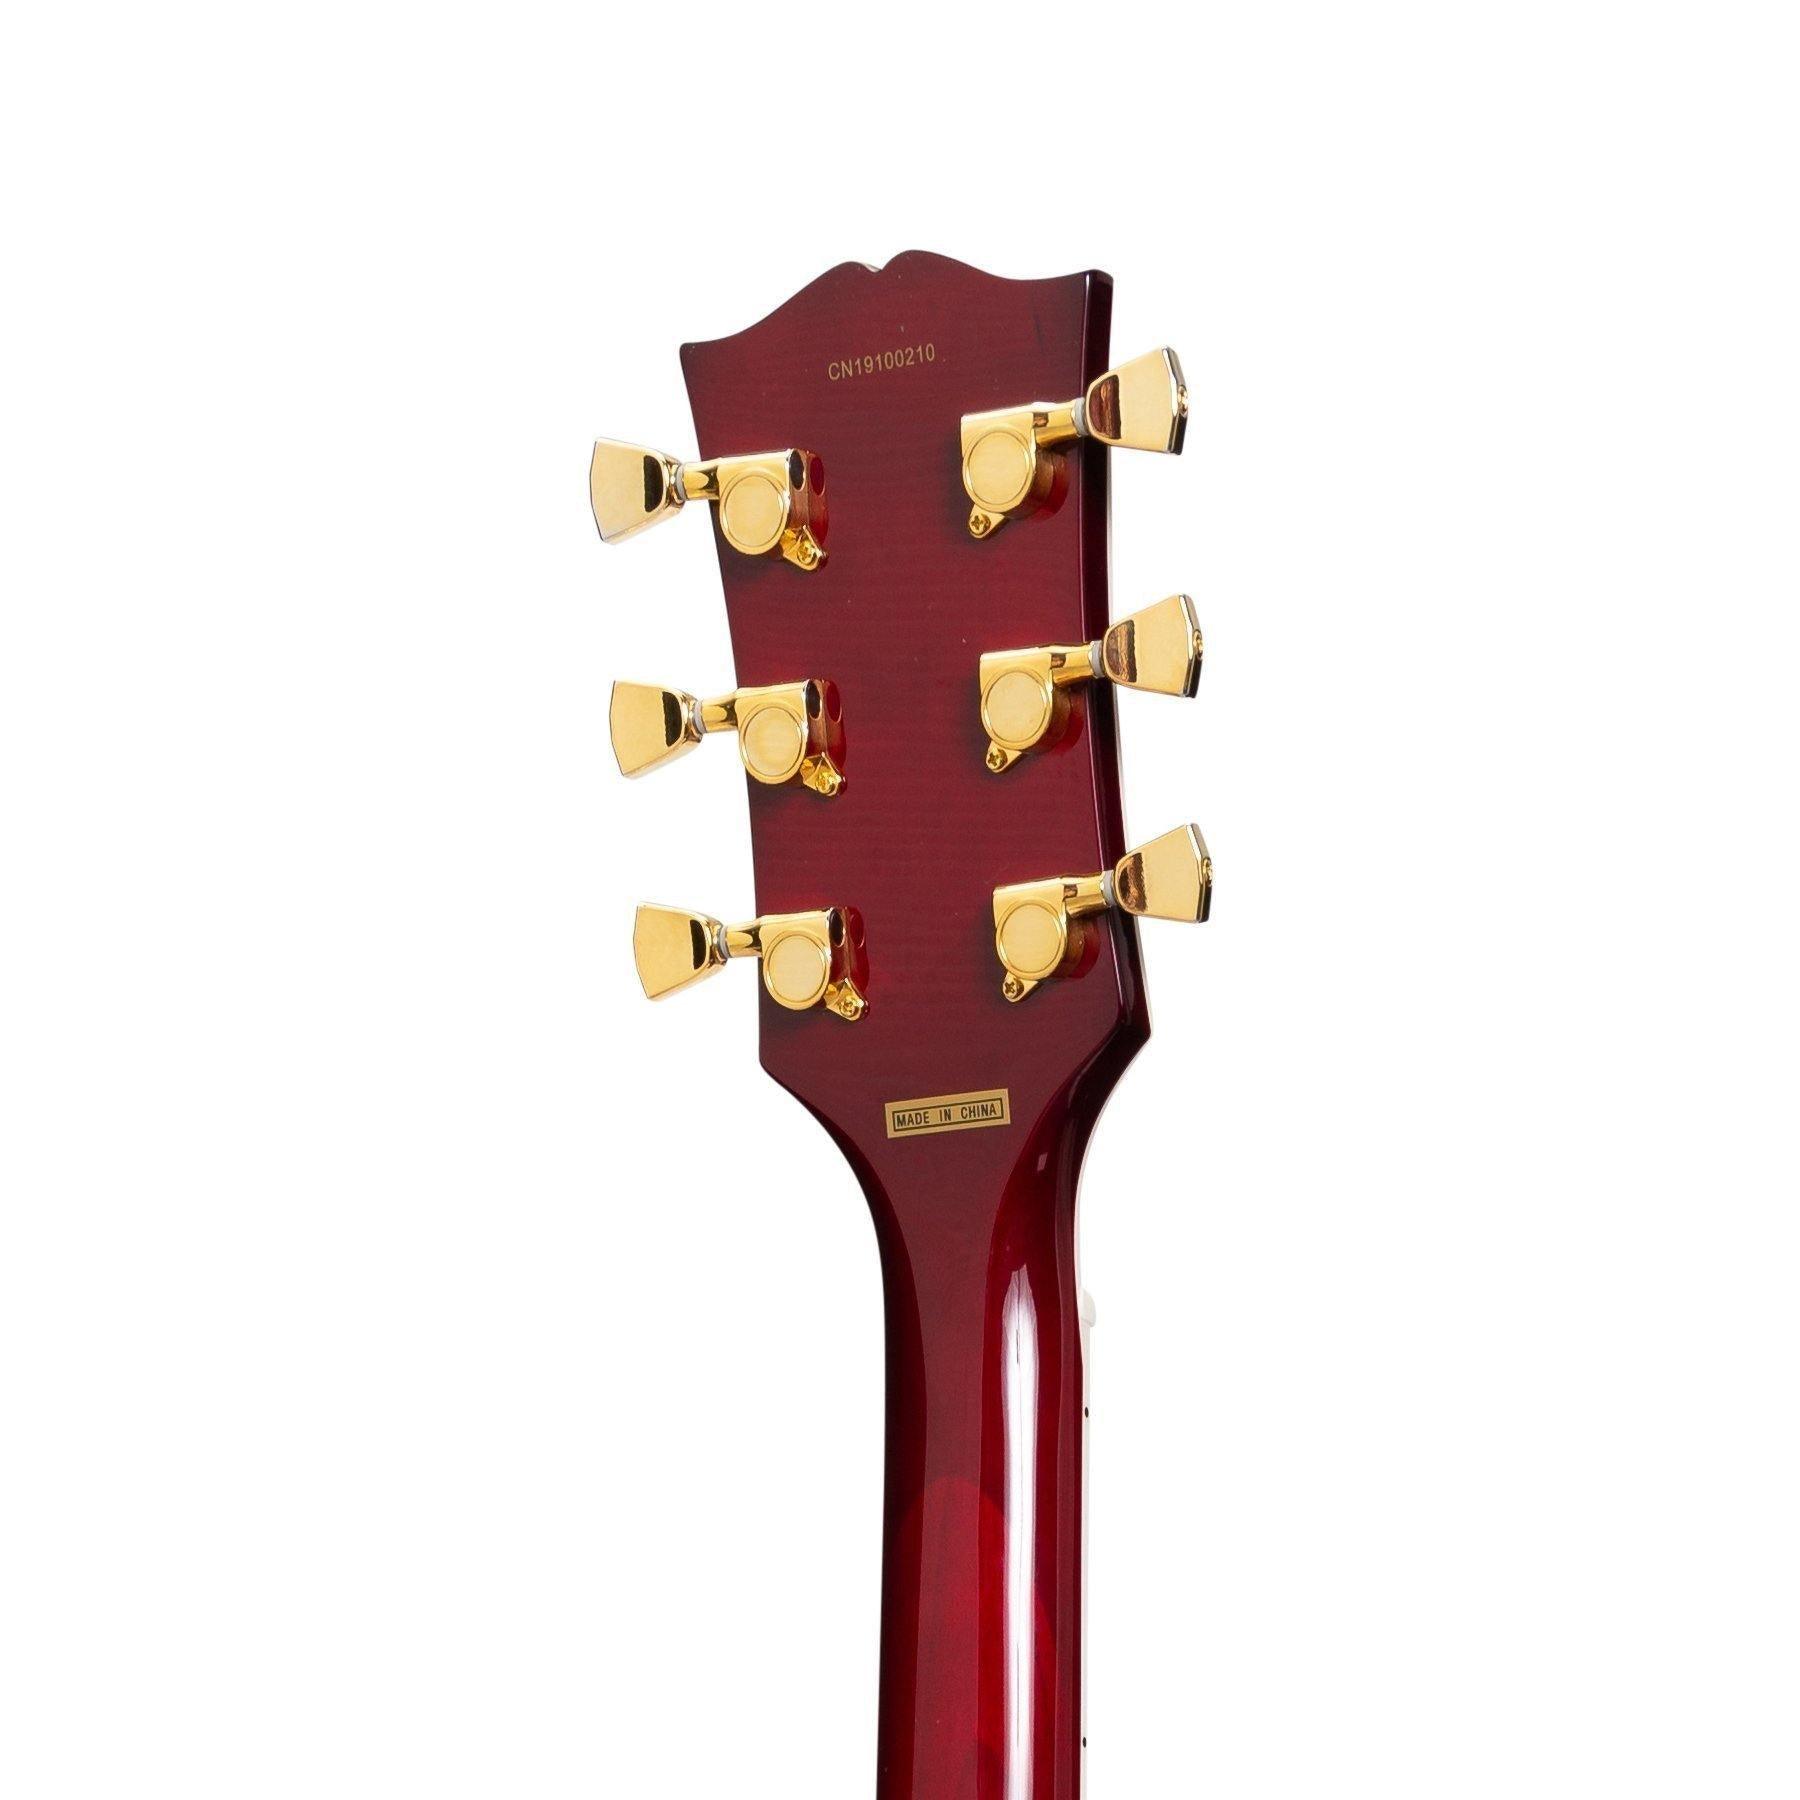 Tokai Trad Lp Custom W/Gigbag Wine Red - Guitars - Electric by Tokai at Muso's Stuff